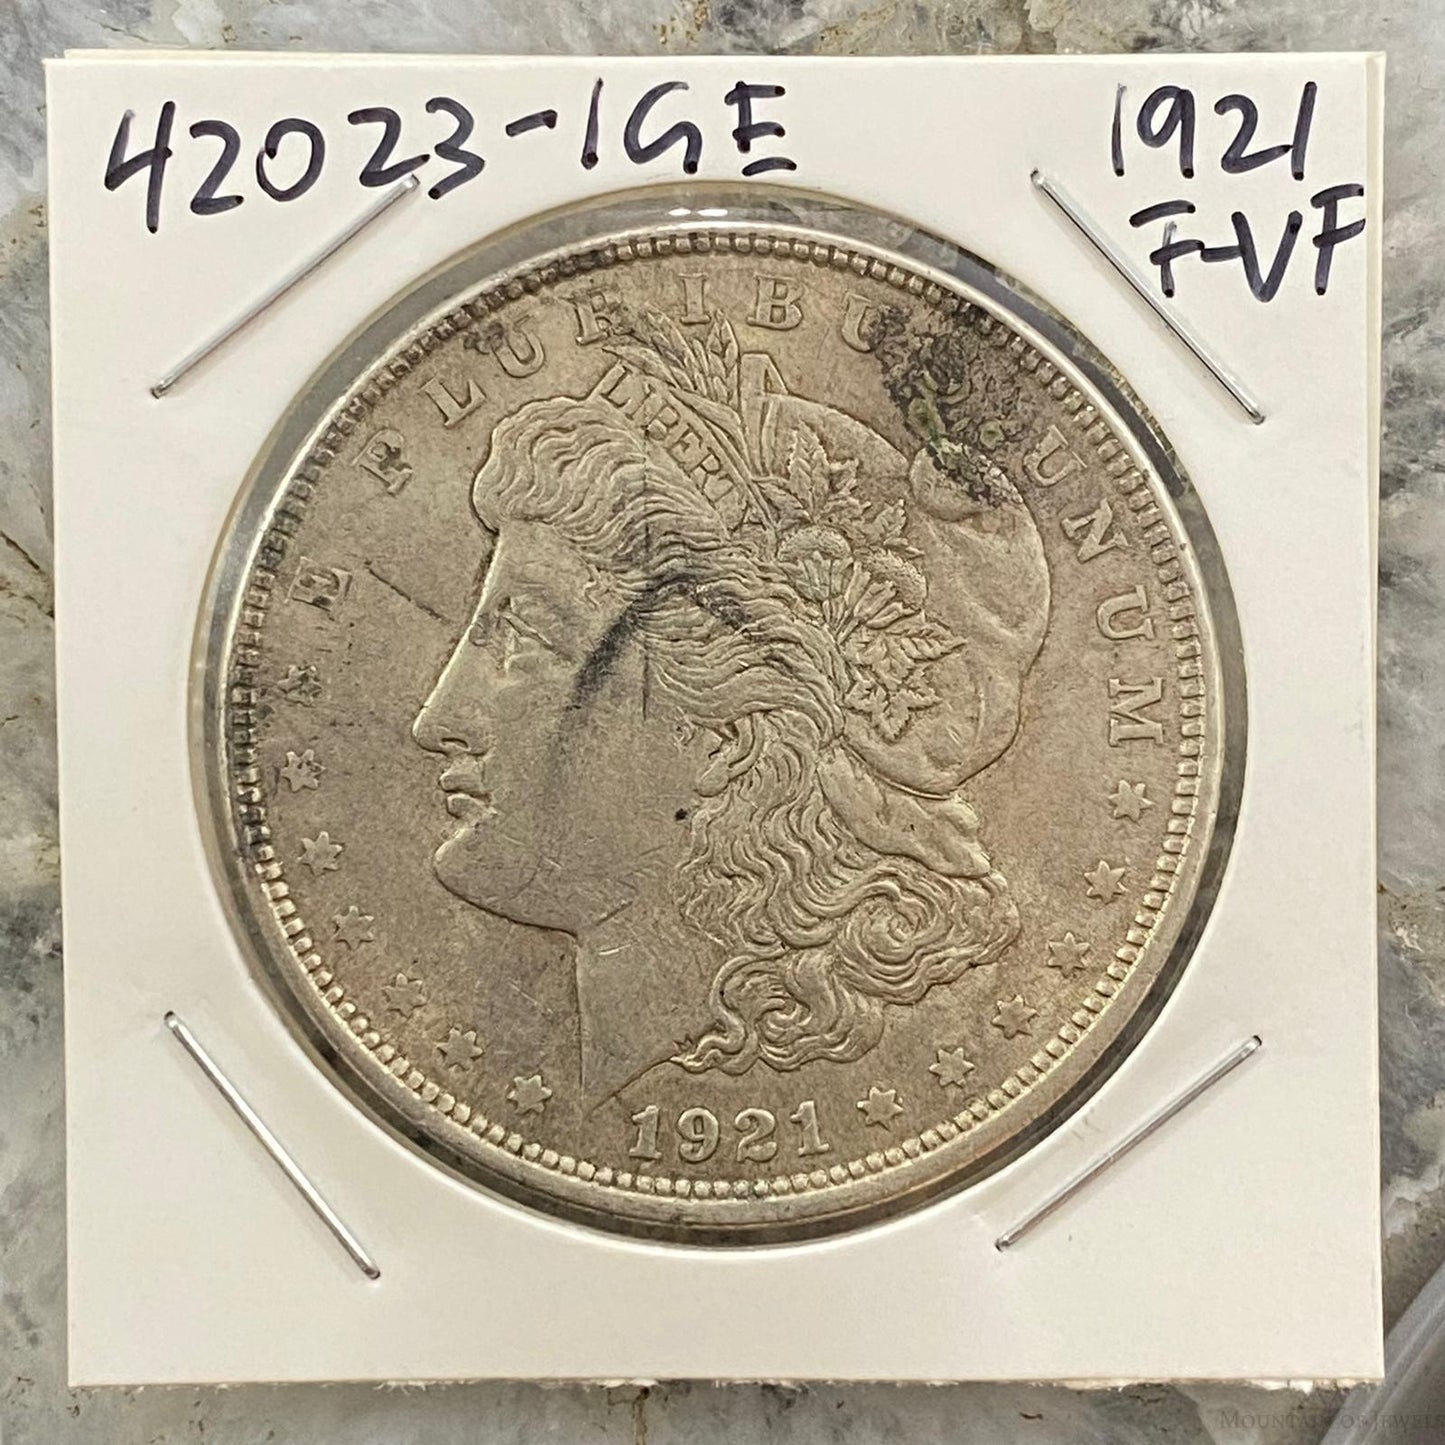 1921 $1 US Morgan Silver Dollar Coin F-VF #42023-1GE